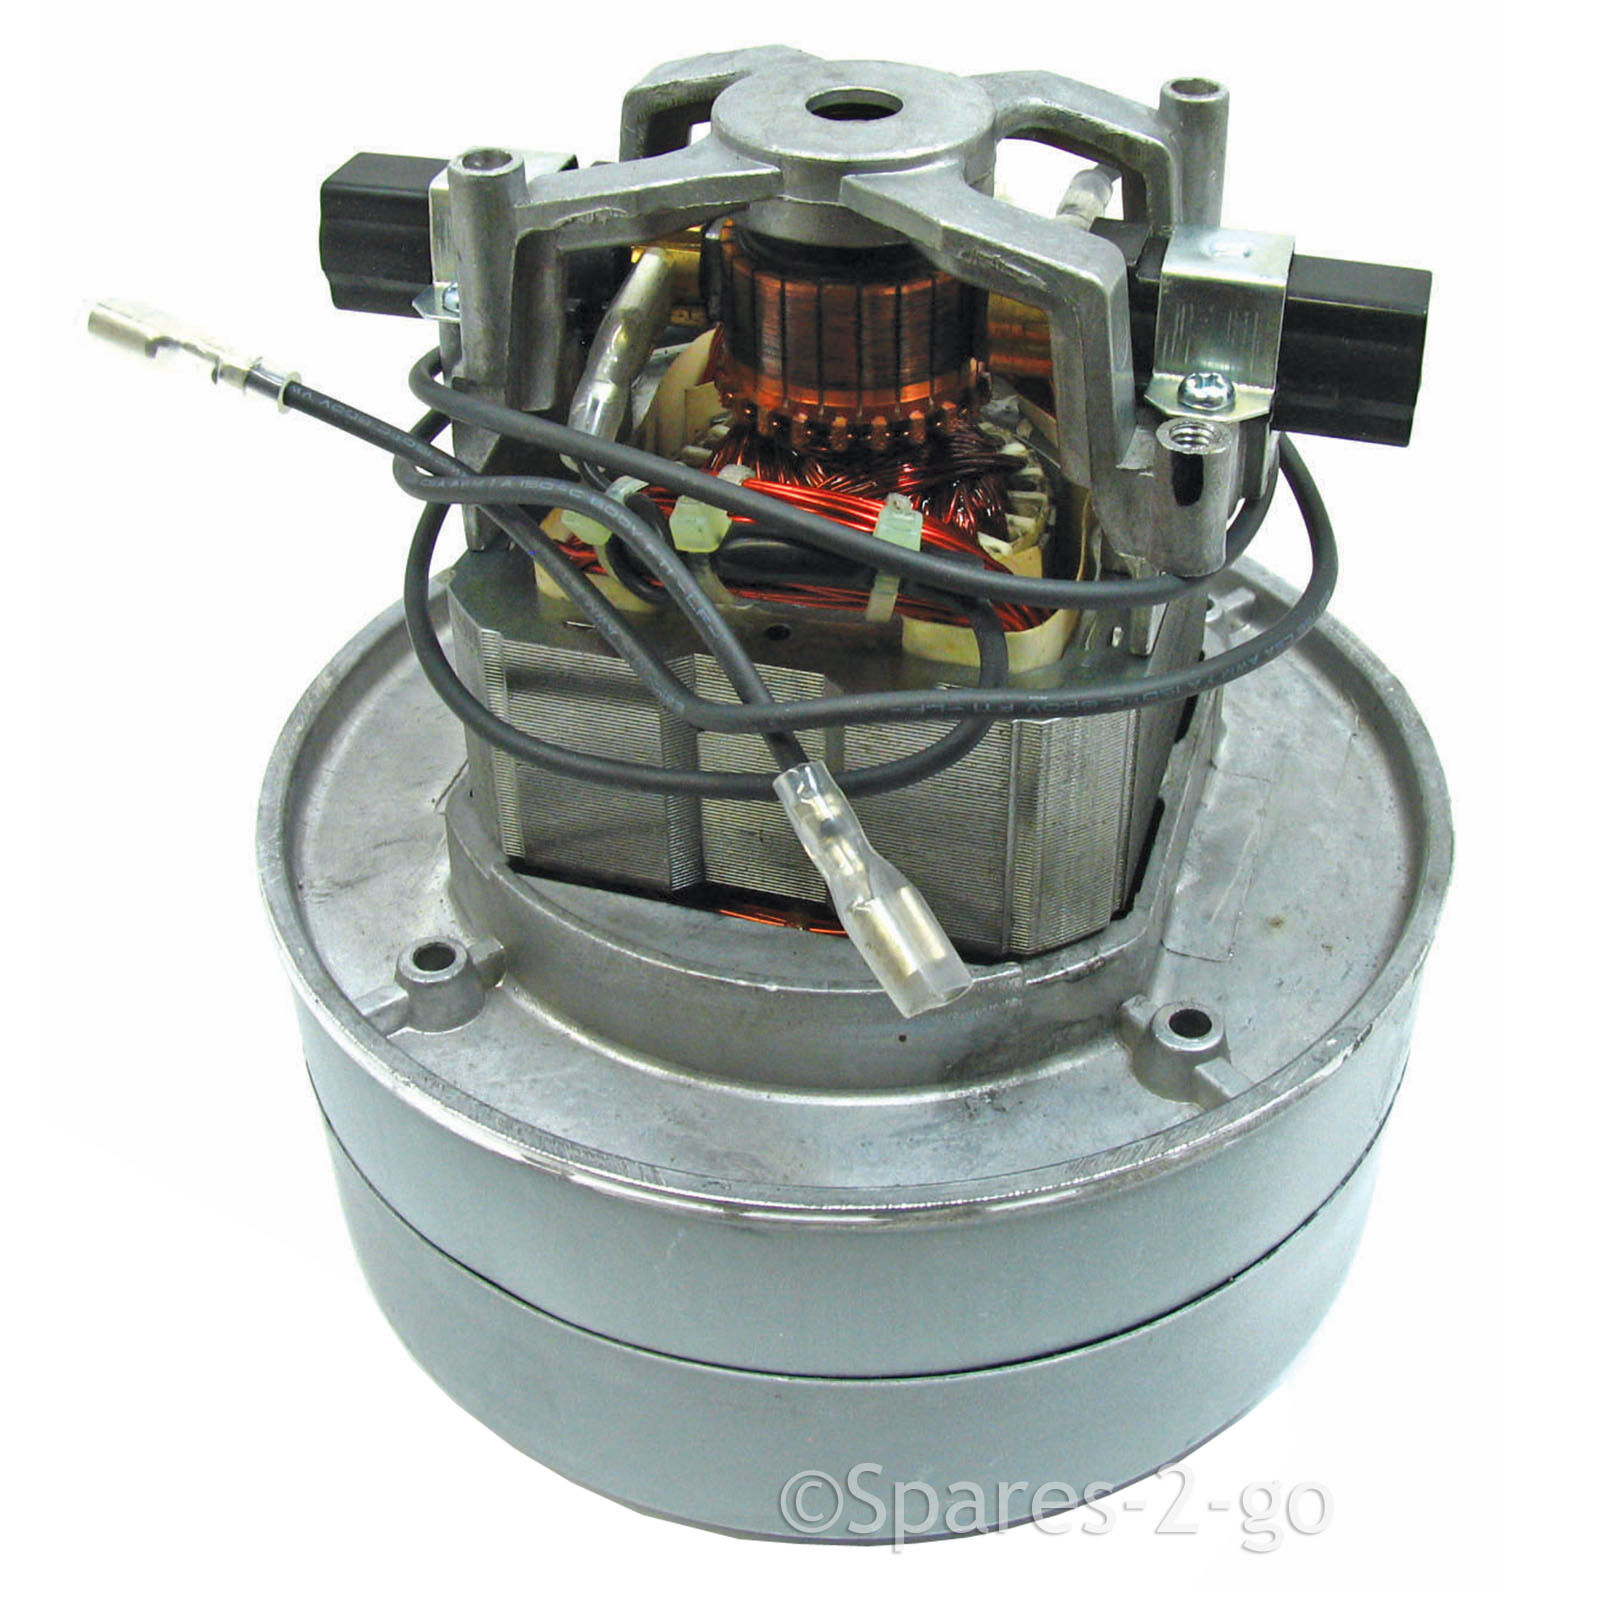 Numatic HENRY TCO DL2 1104T Vacuum Cleaner Hoover Compatible Motor 205403 240V